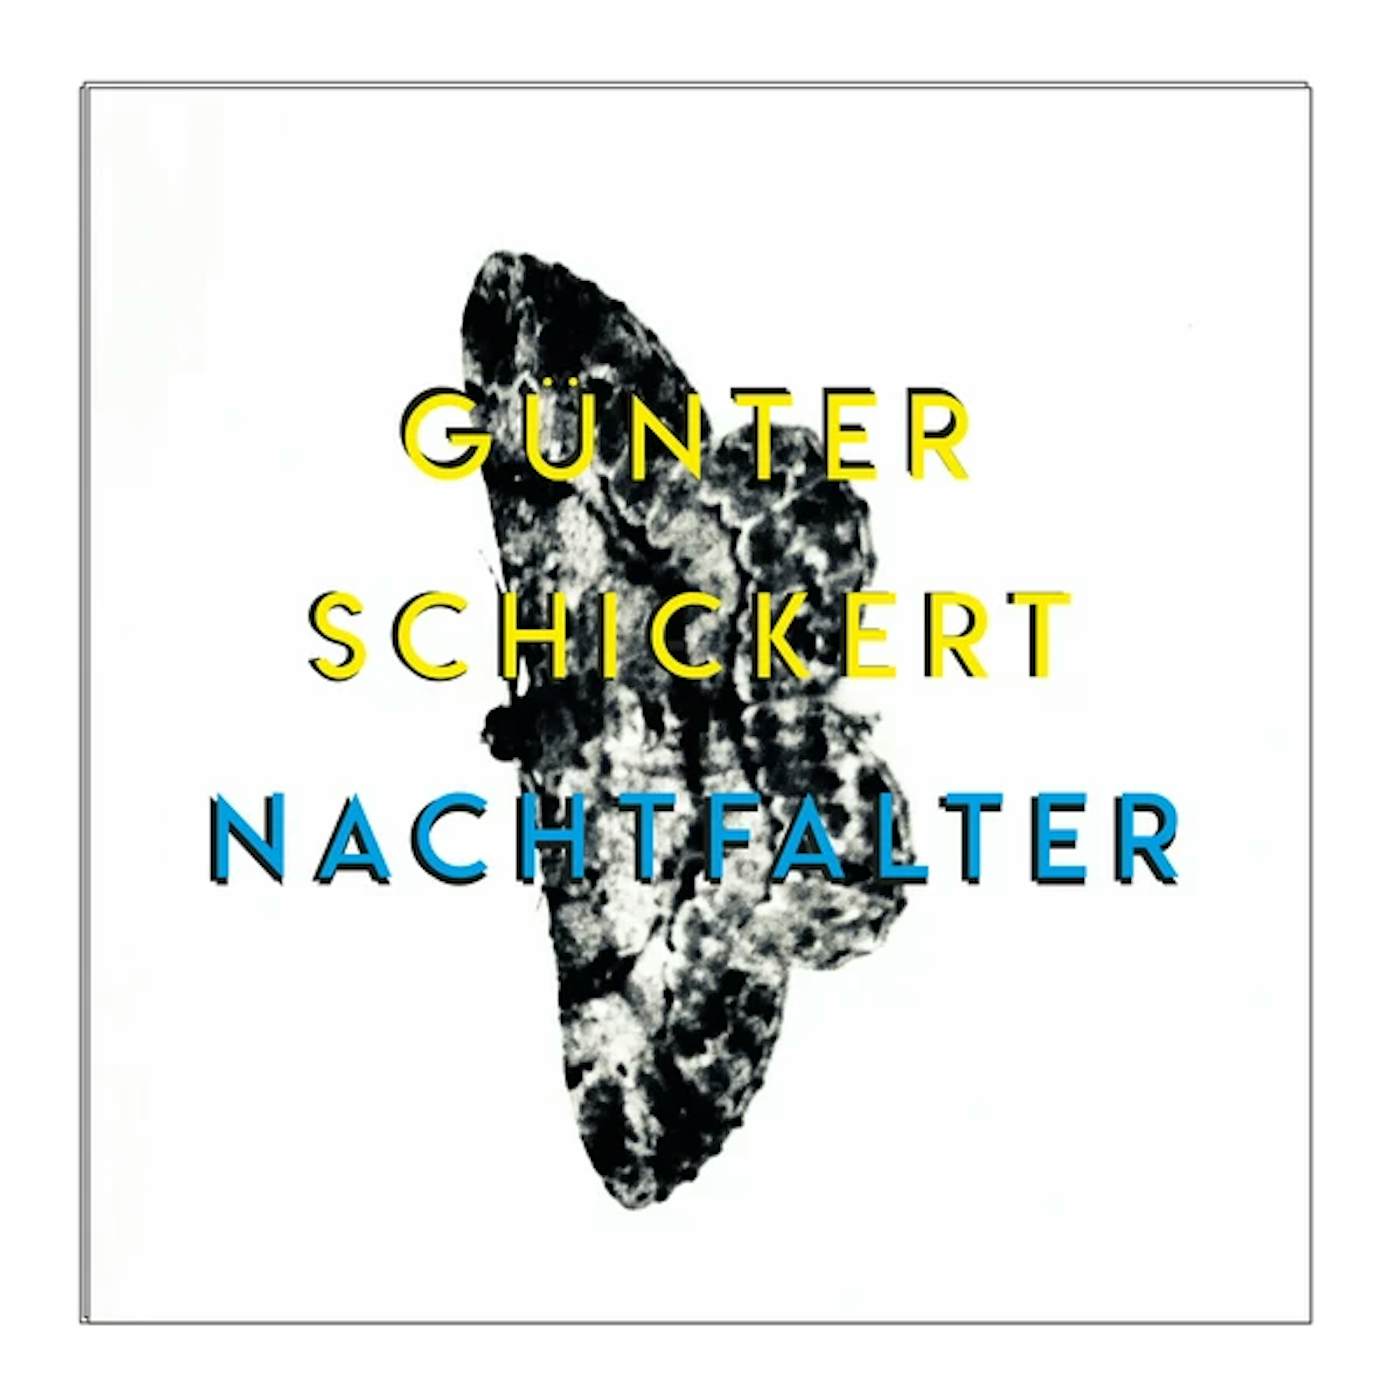 Günter Schickert Nachtfalter Vinyl Record